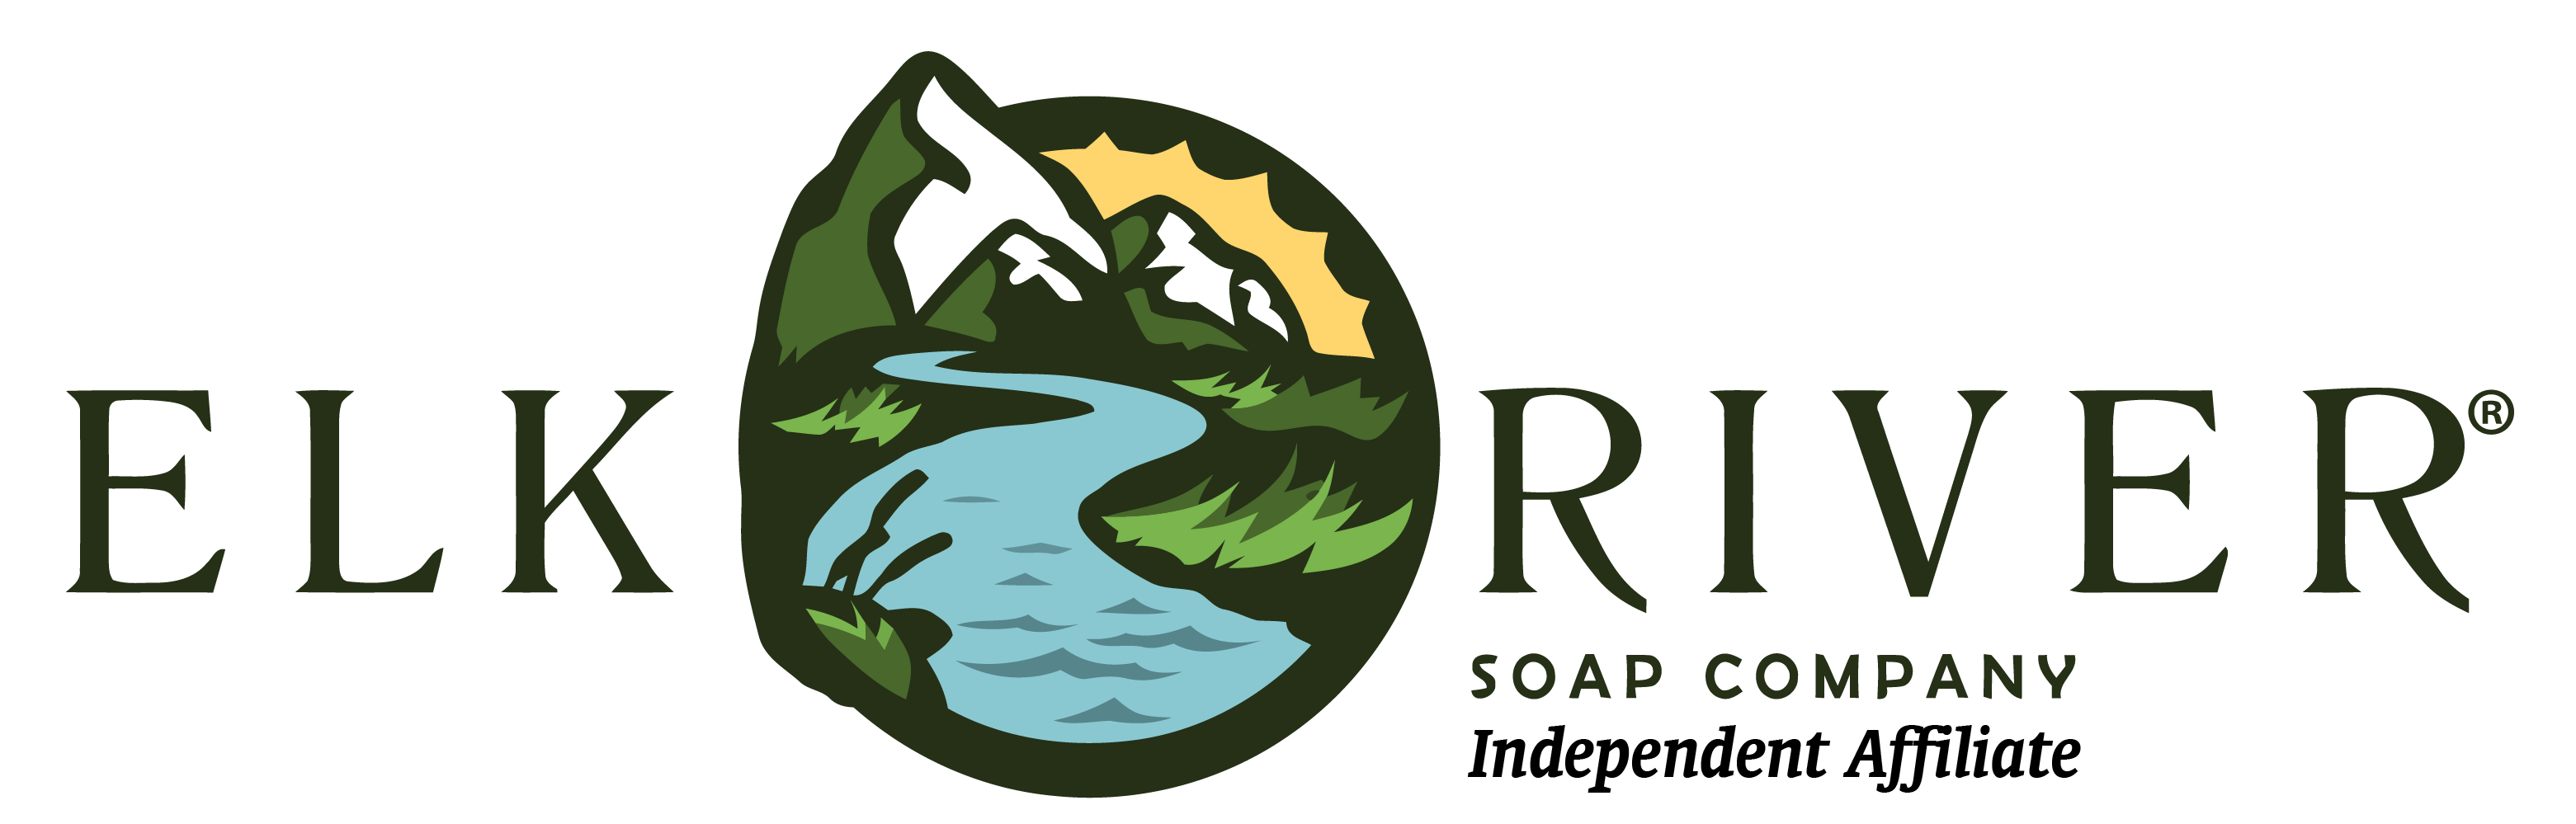 shampoo clipart bath soap